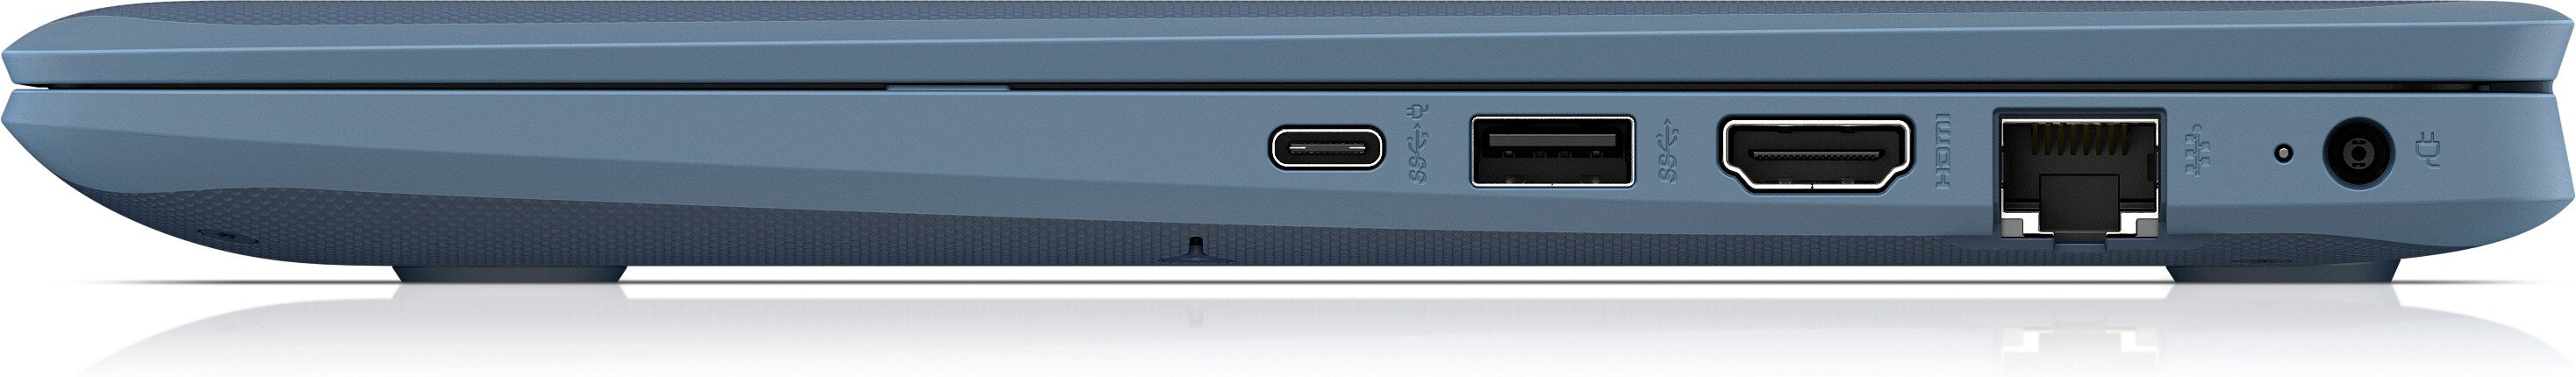 HP ProBook x360 11 G5 EE, Intel® Pentium® Silver, 1.1 GHz, 29.5 cm (11.6"), 1366 x 768 pixels, 4 GB, 128 GB